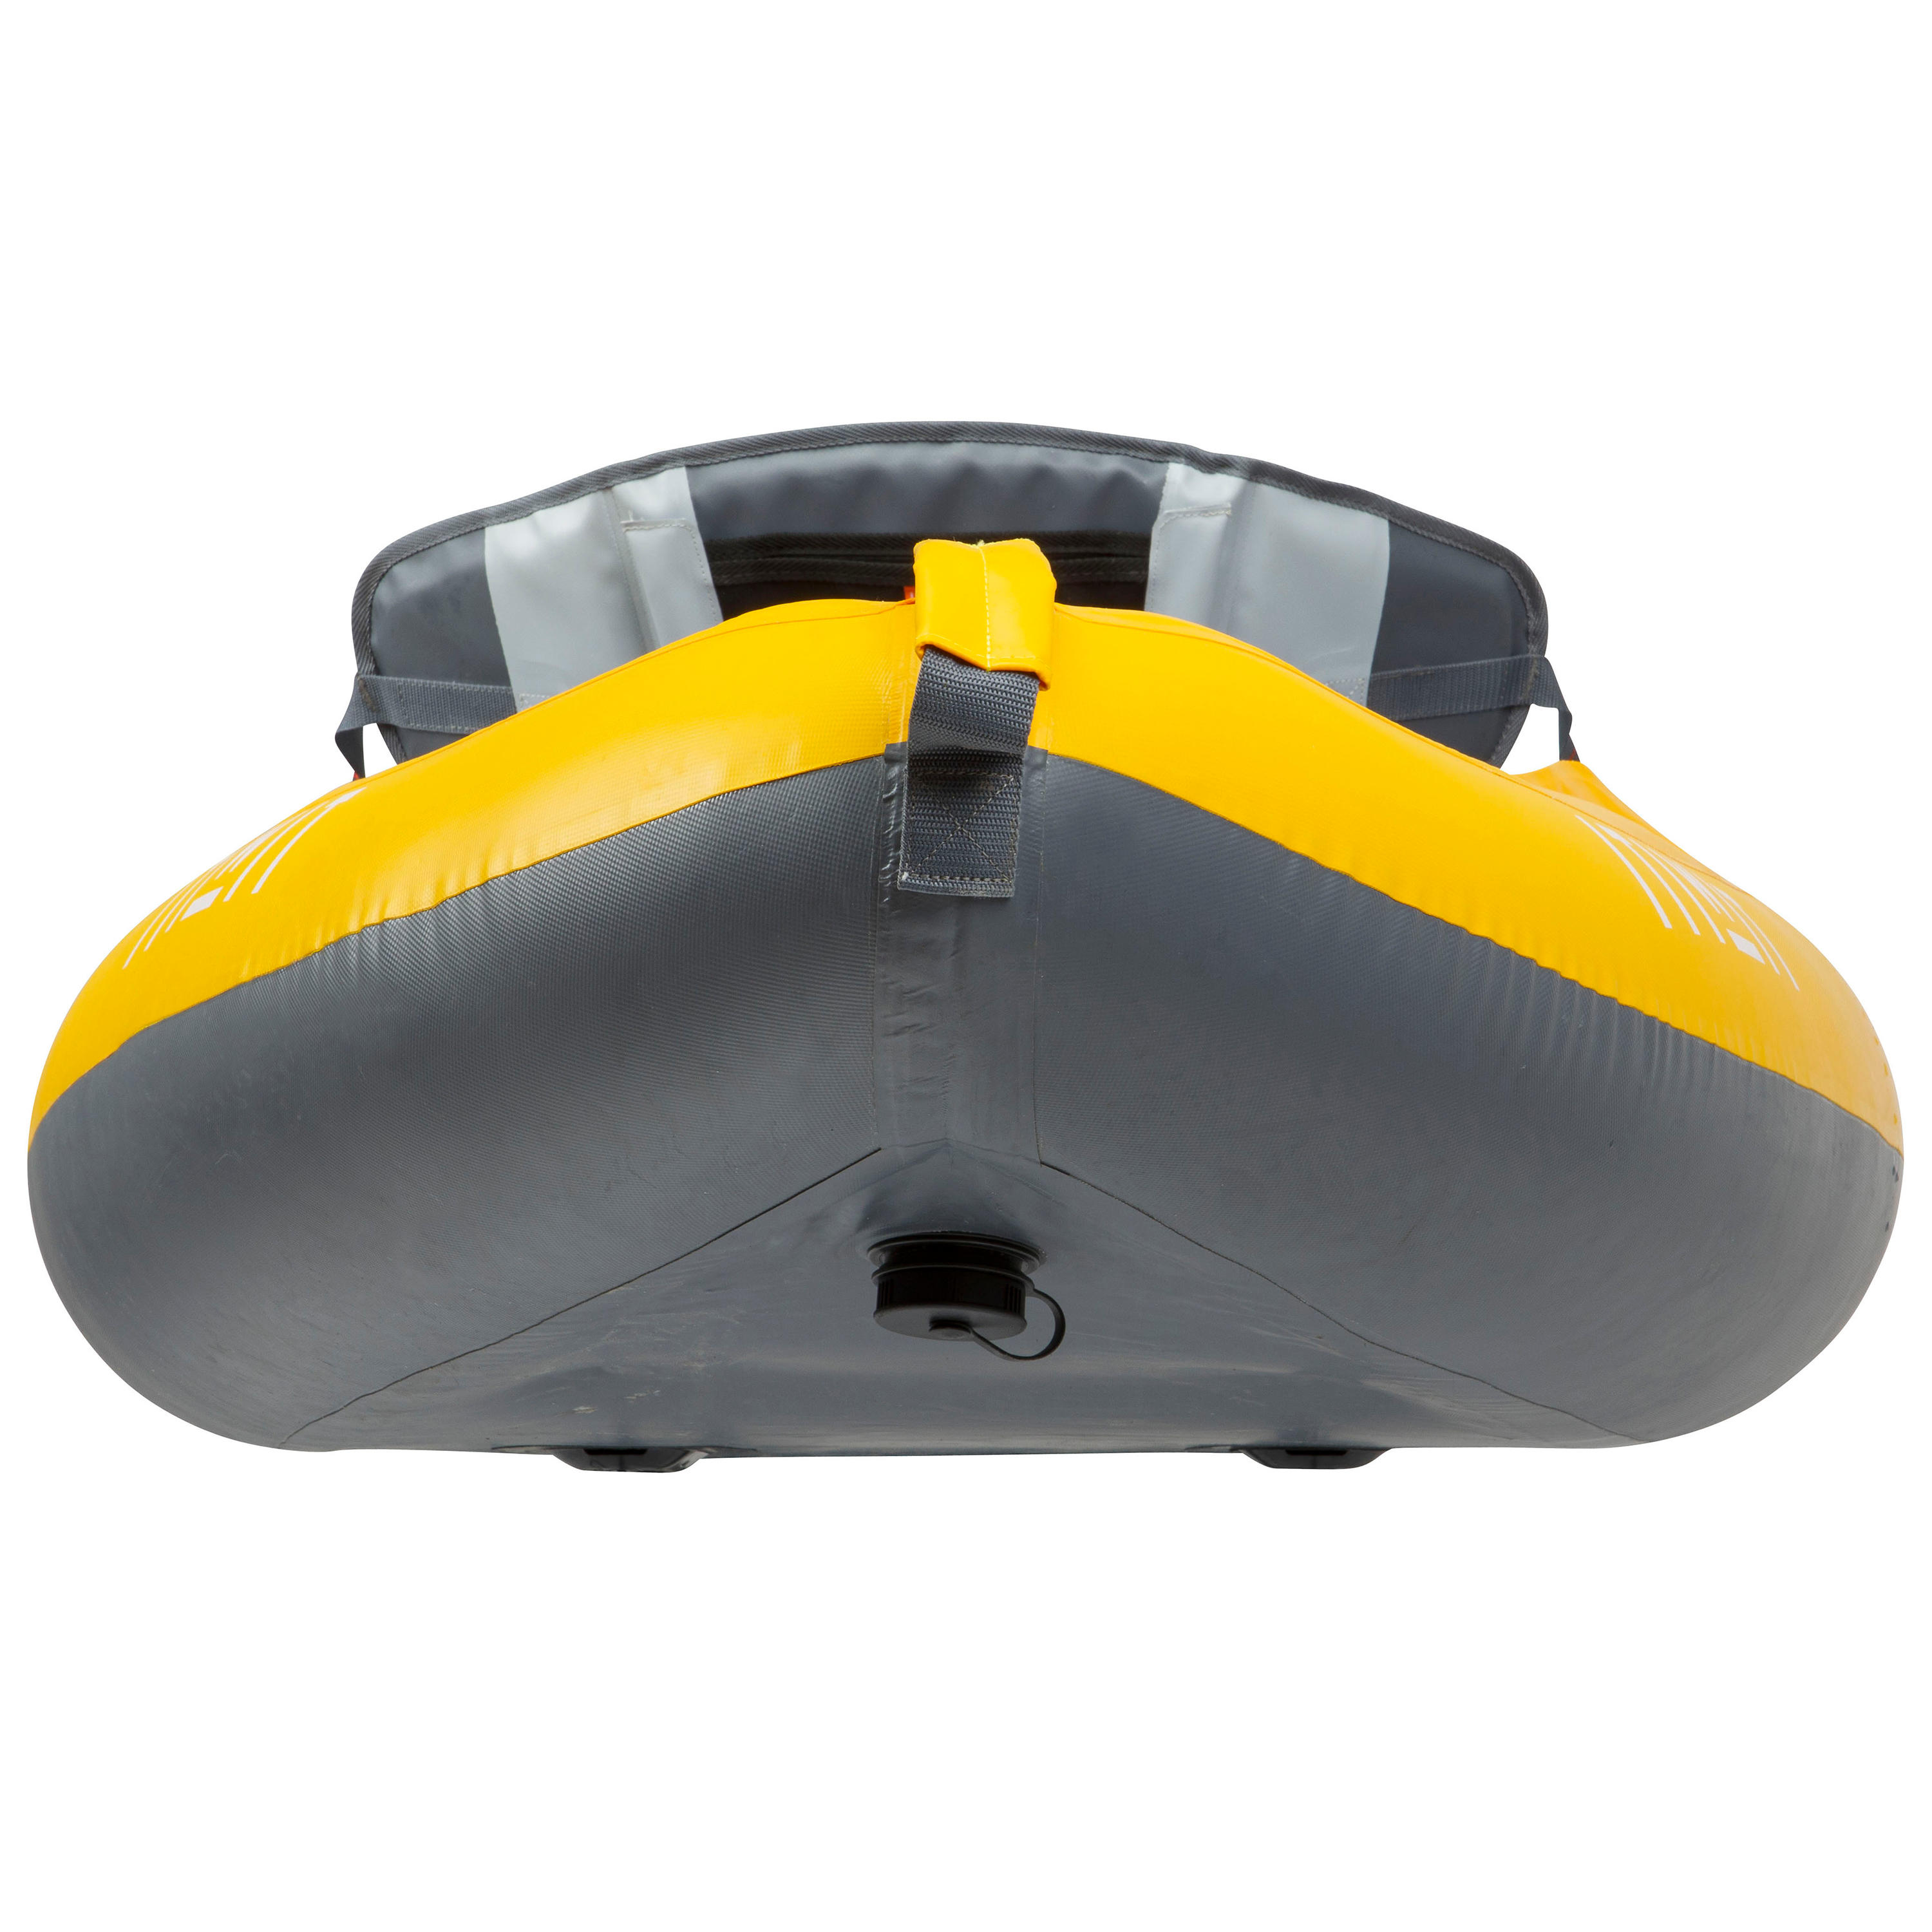 2-Seater Inflatable Kayak - KTI X 100+ Yellow